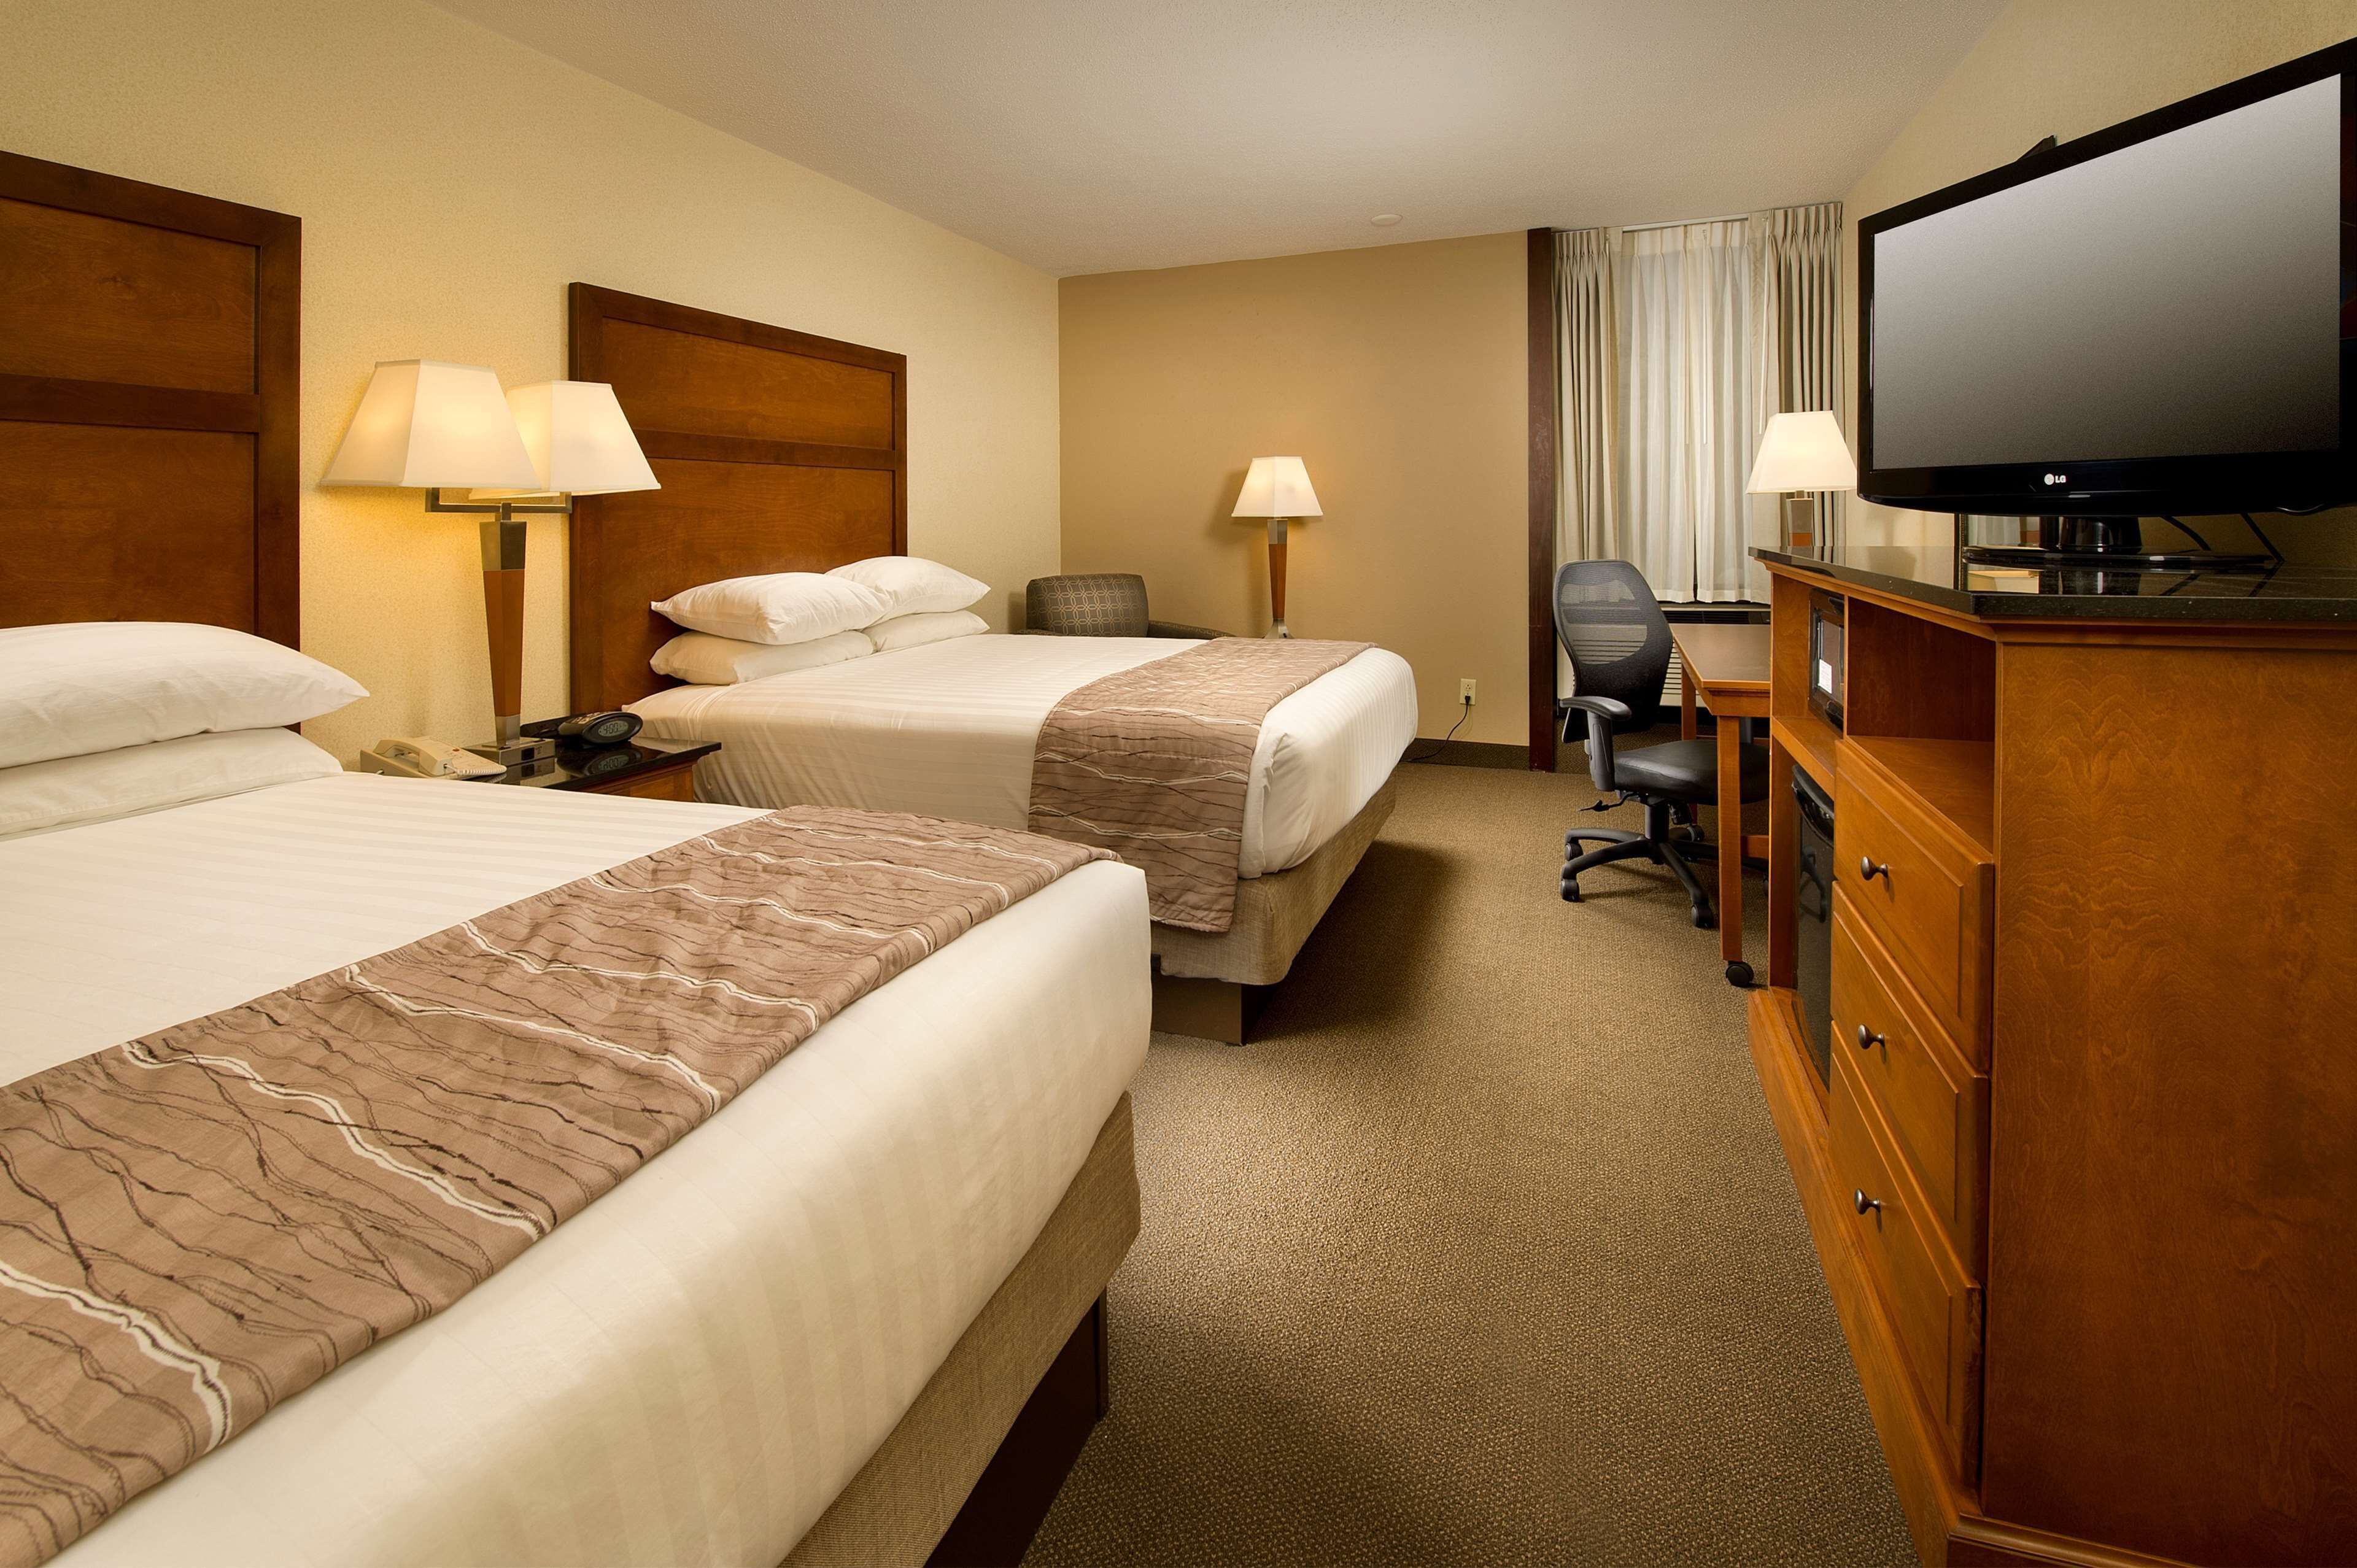 Bedroom view of Drury Inn & Suites Springfield, IL